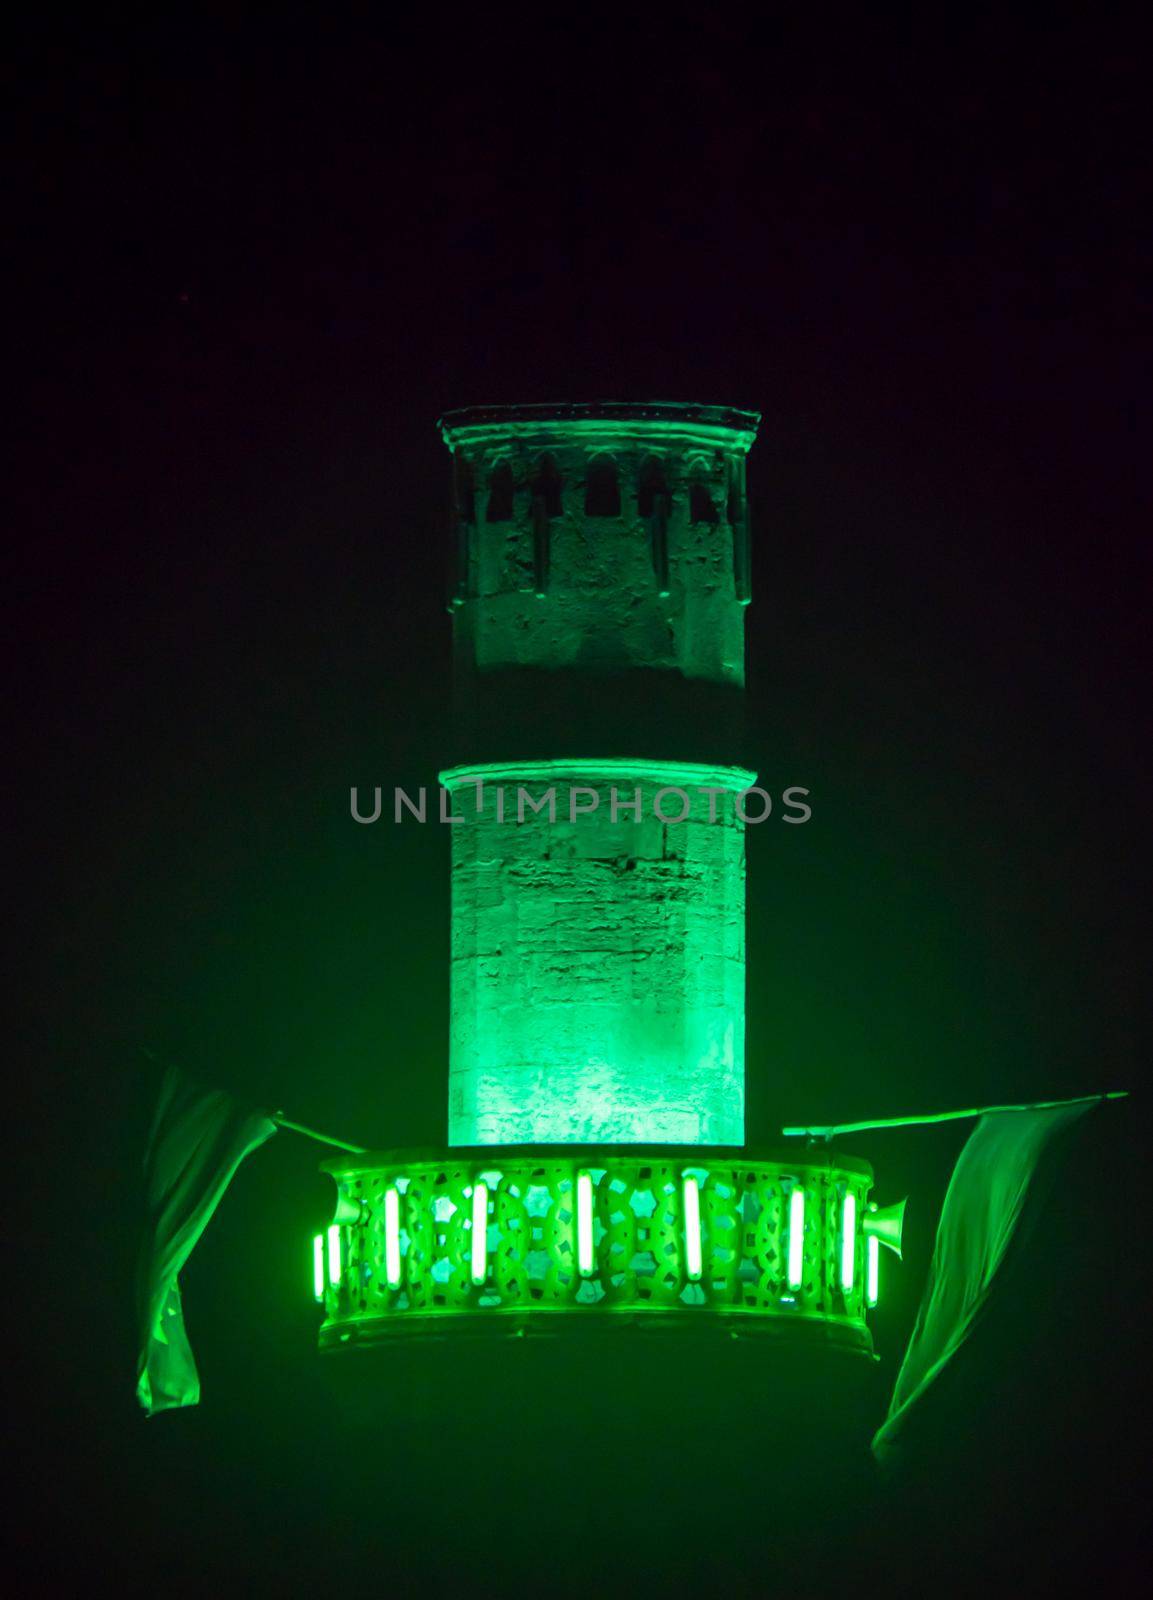 mosque minaret green light at night by alex_nako